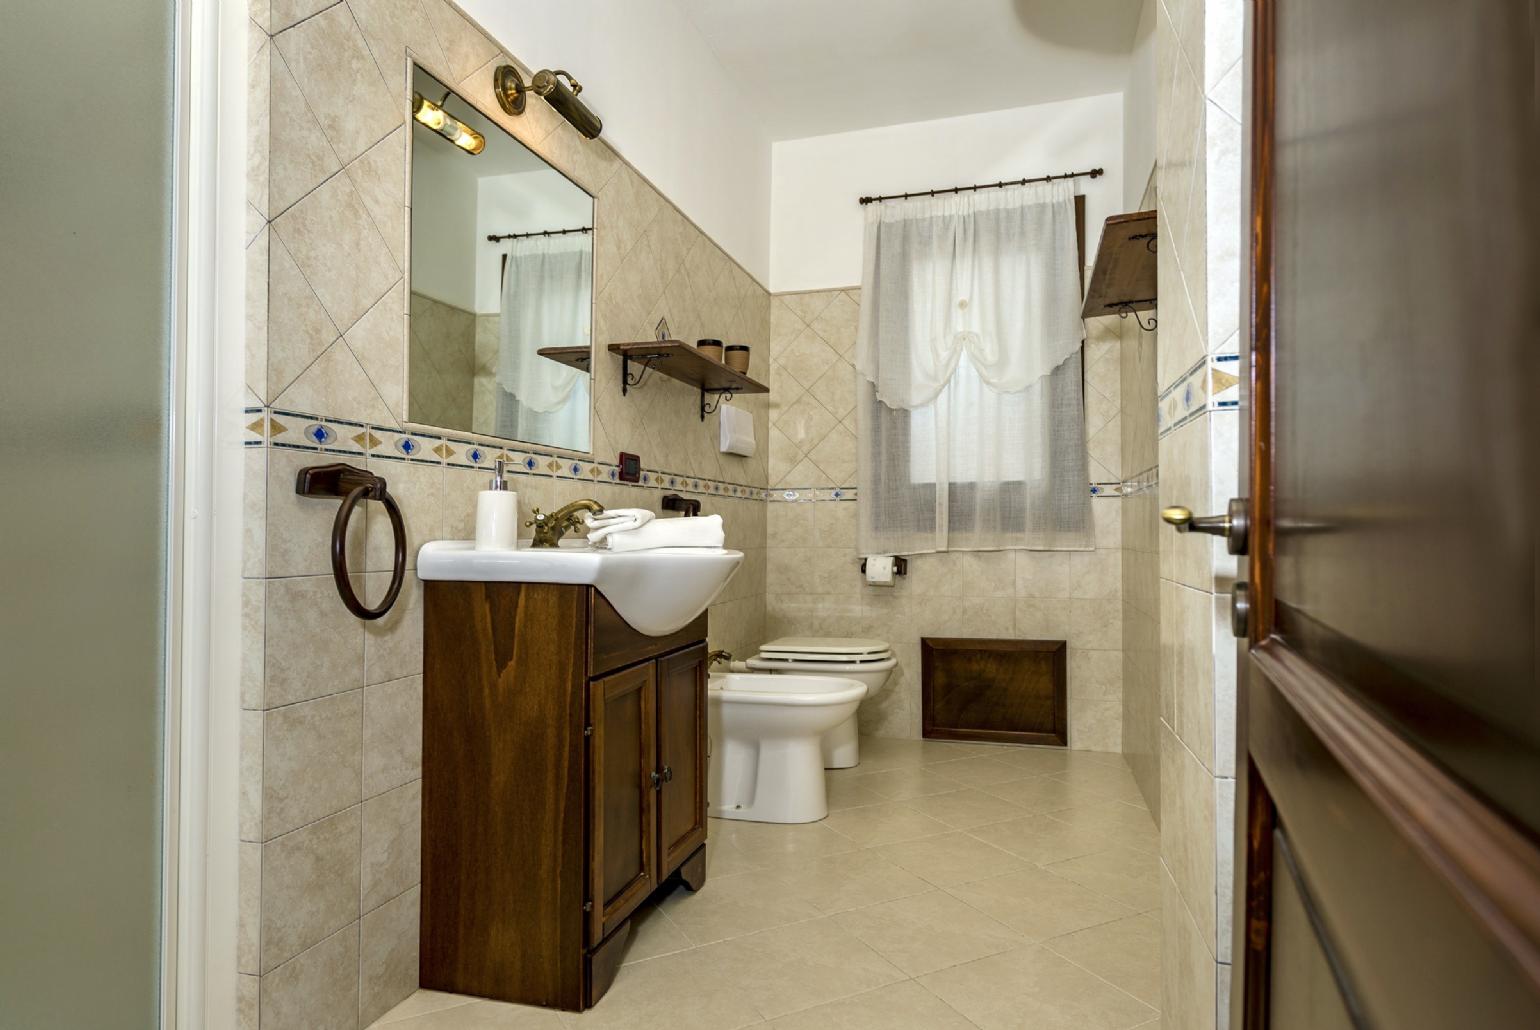  En suite bathroom with shower